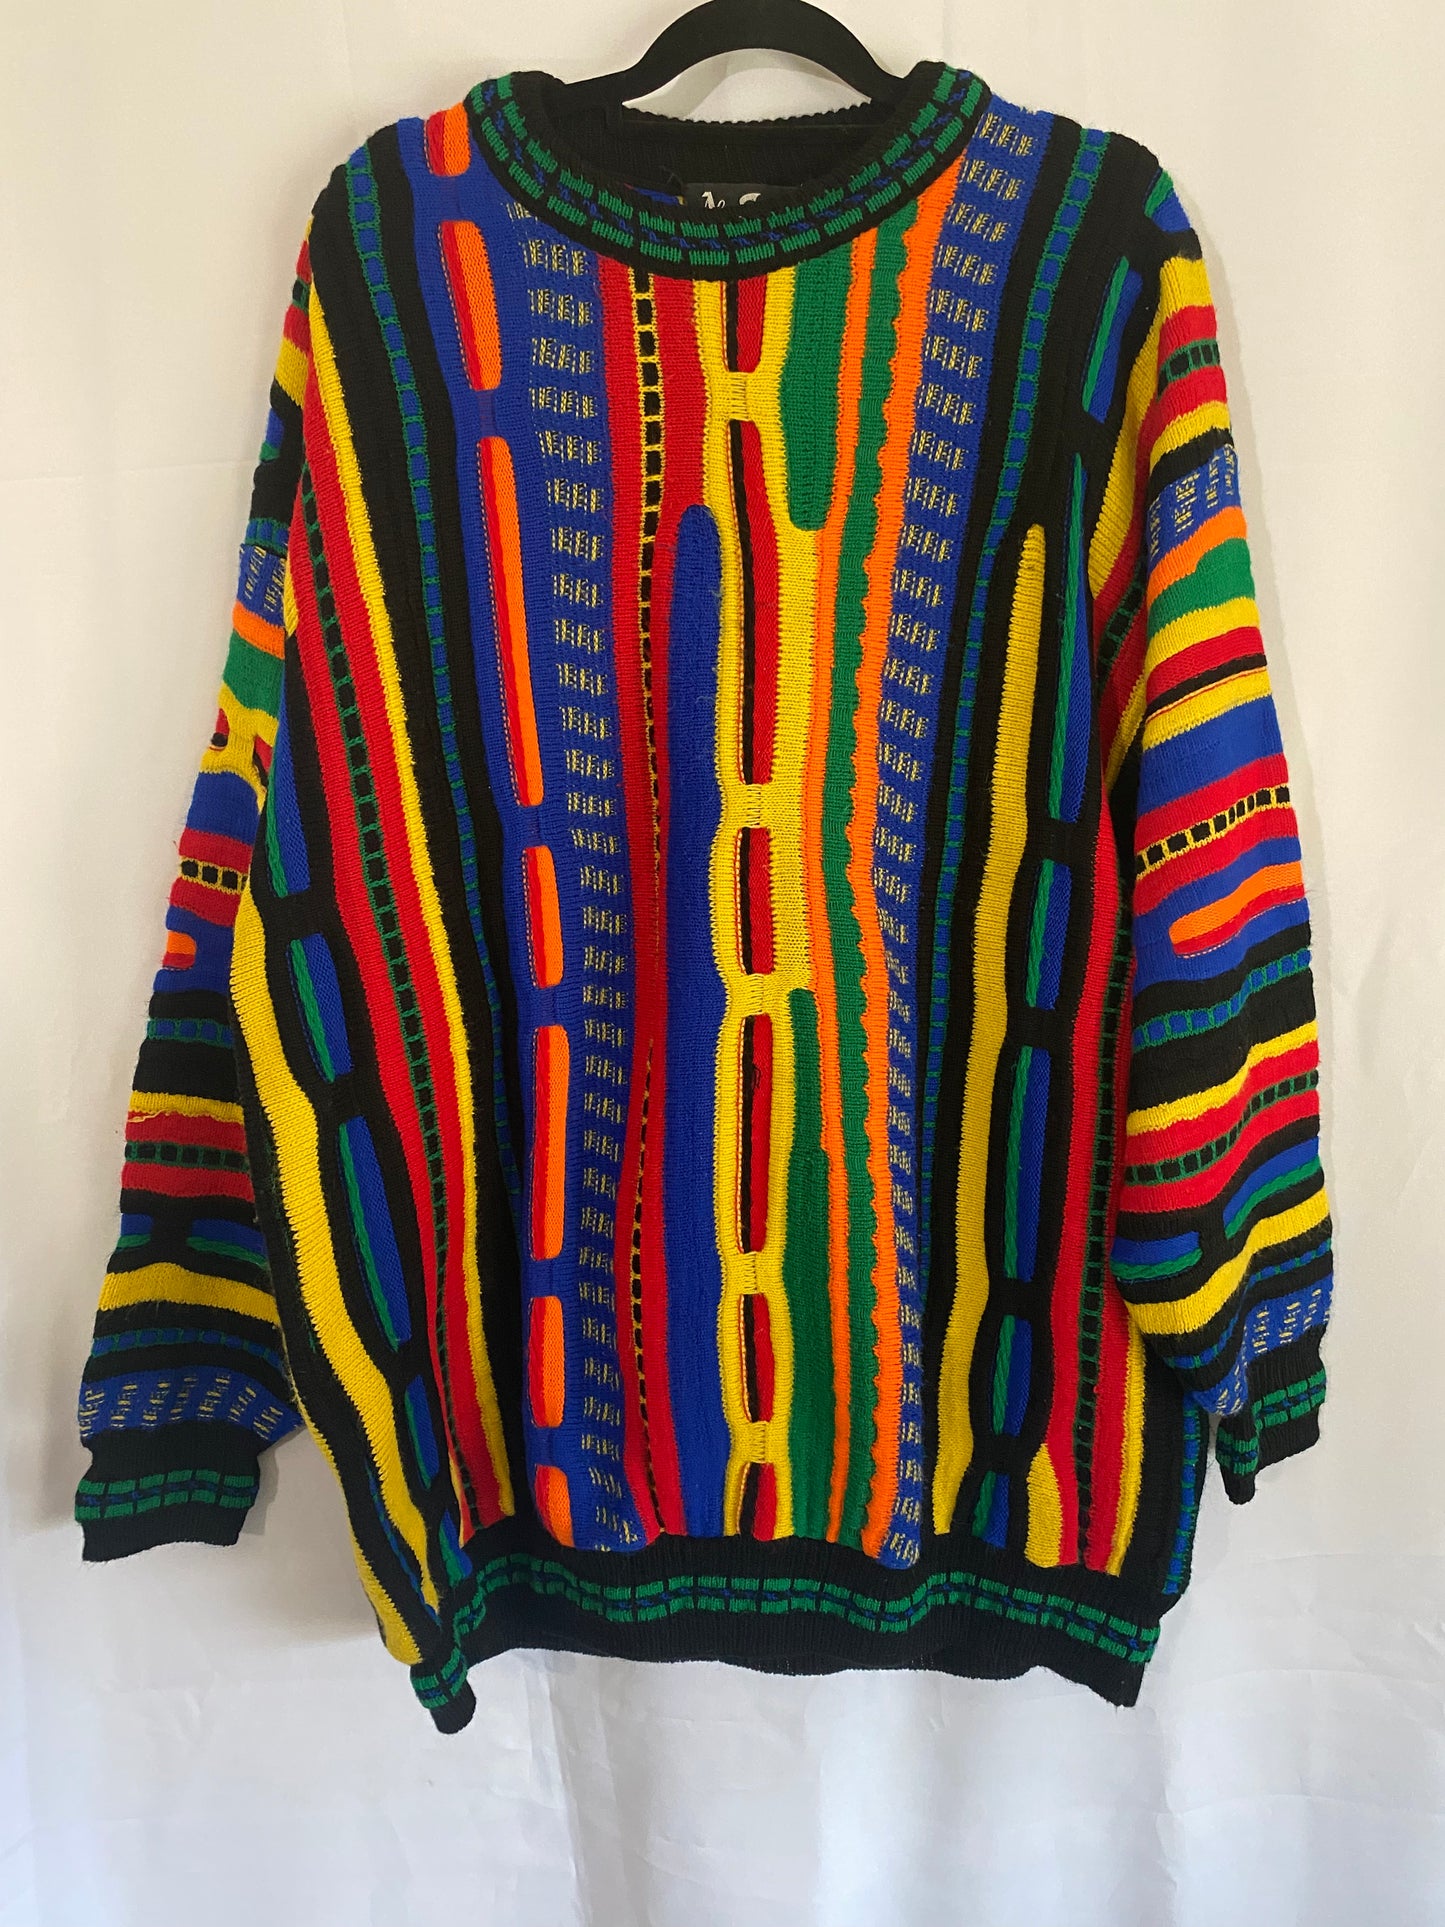 Alan Stuart "Coogie" Style Sweater